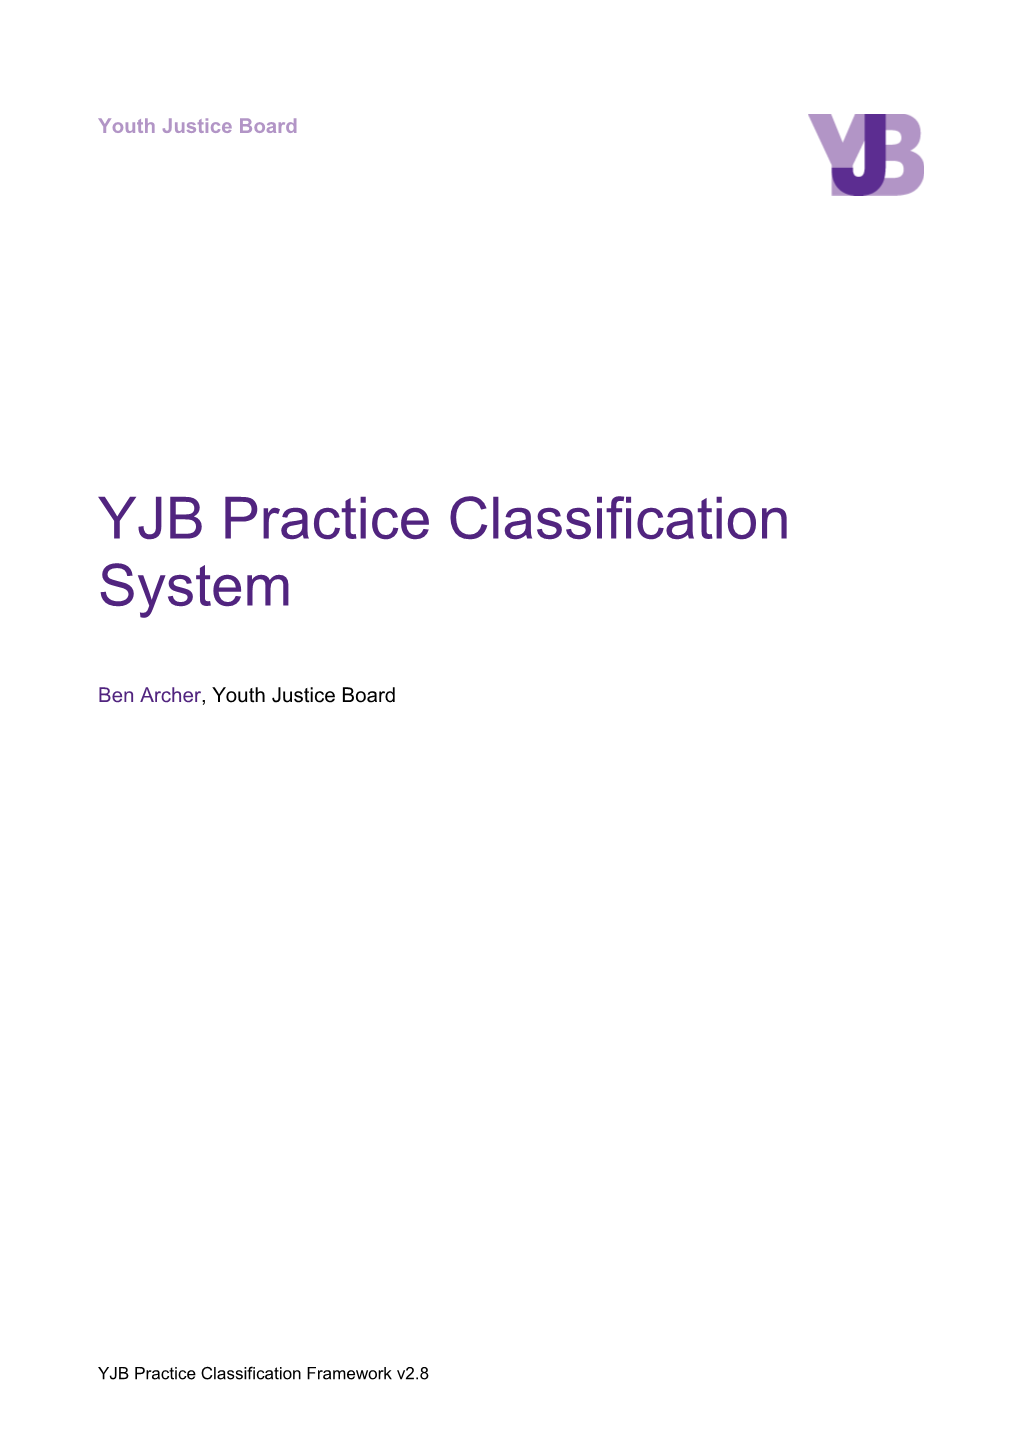 Practice Classification Framework